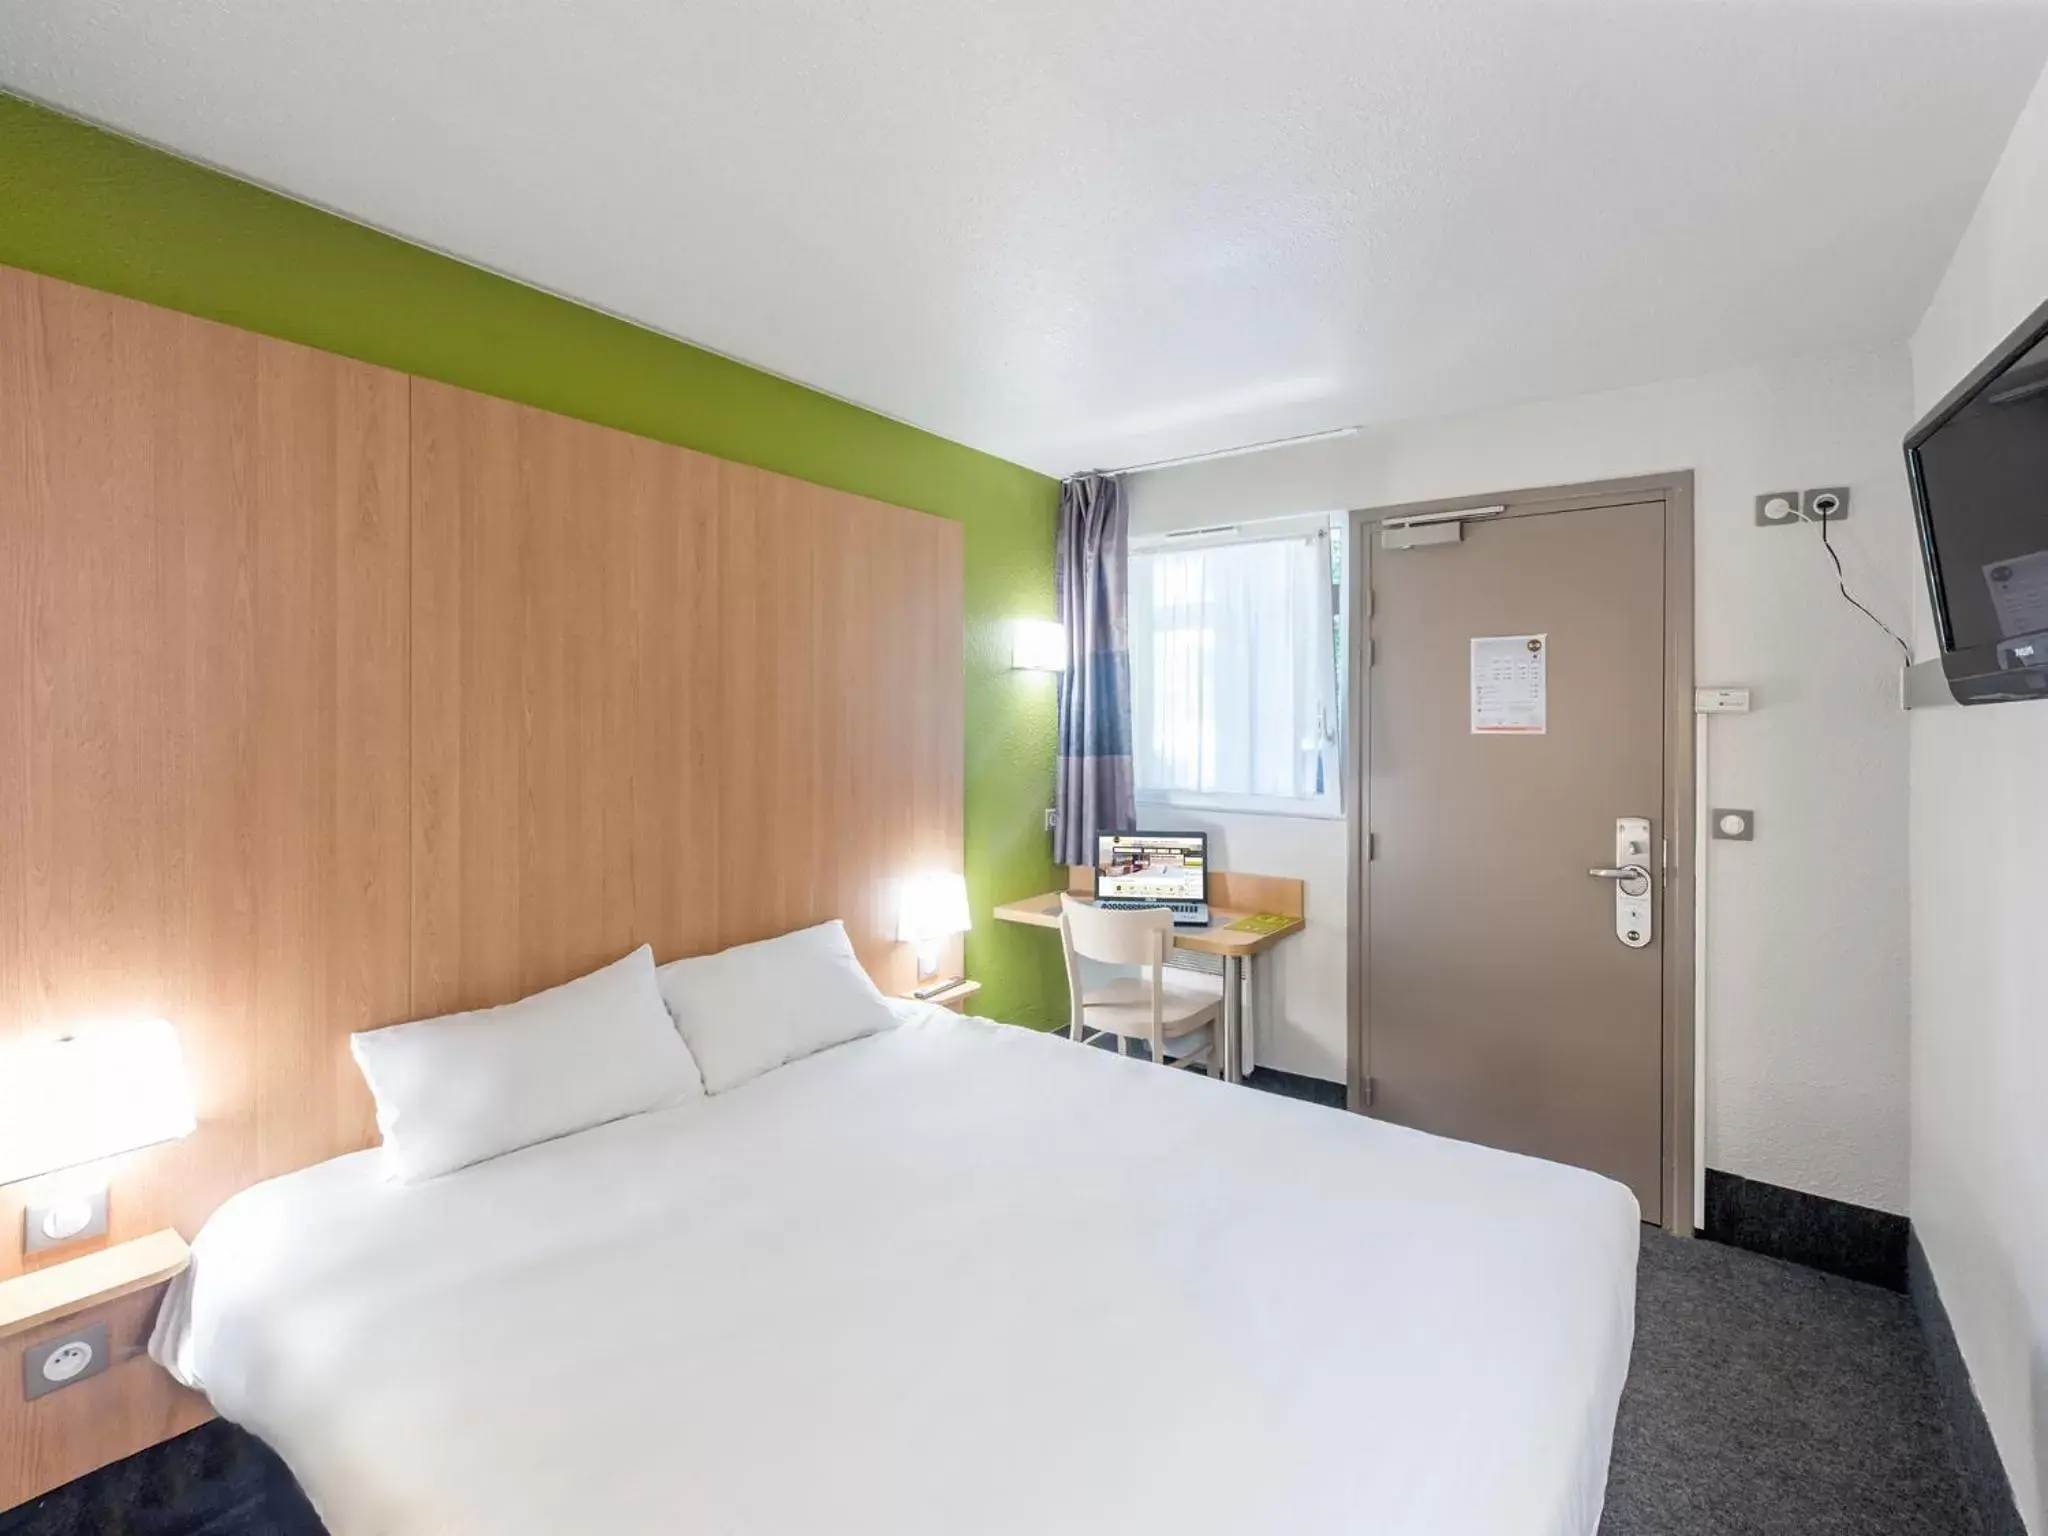 Photo of the whole room, Bed in B&B HOTEL Brest Kergaradec Aéroport Gouesnou